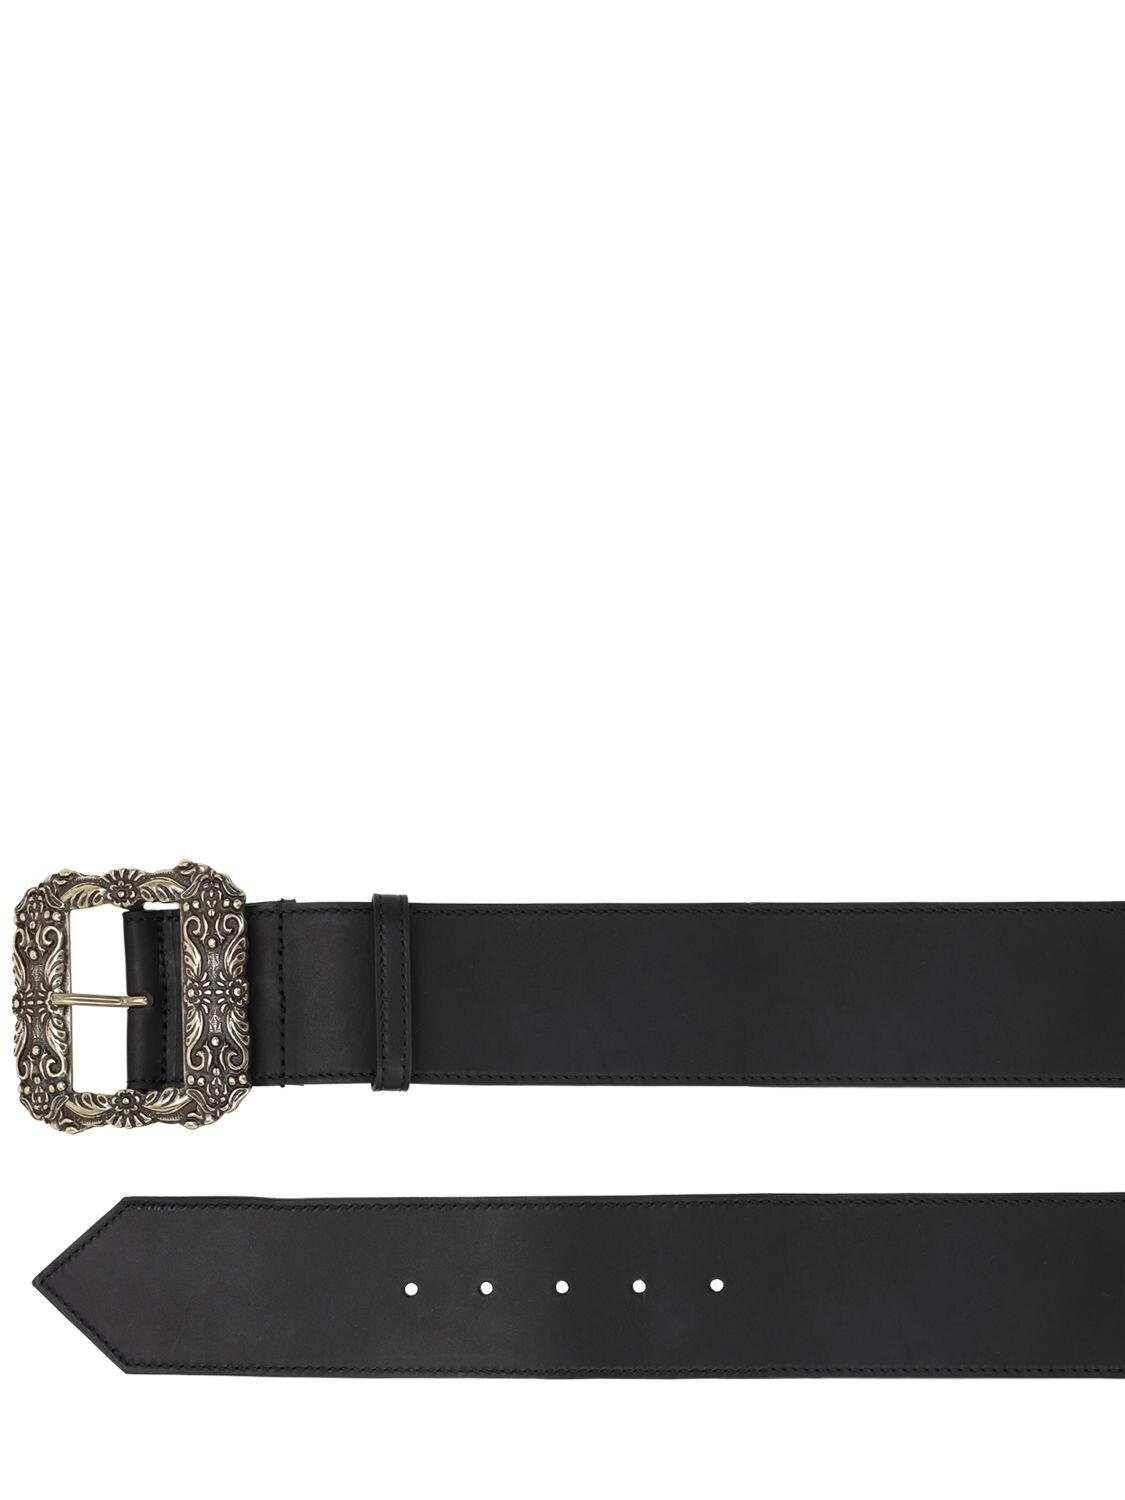 Etro 60mm Leather Belt in Black - Lyst